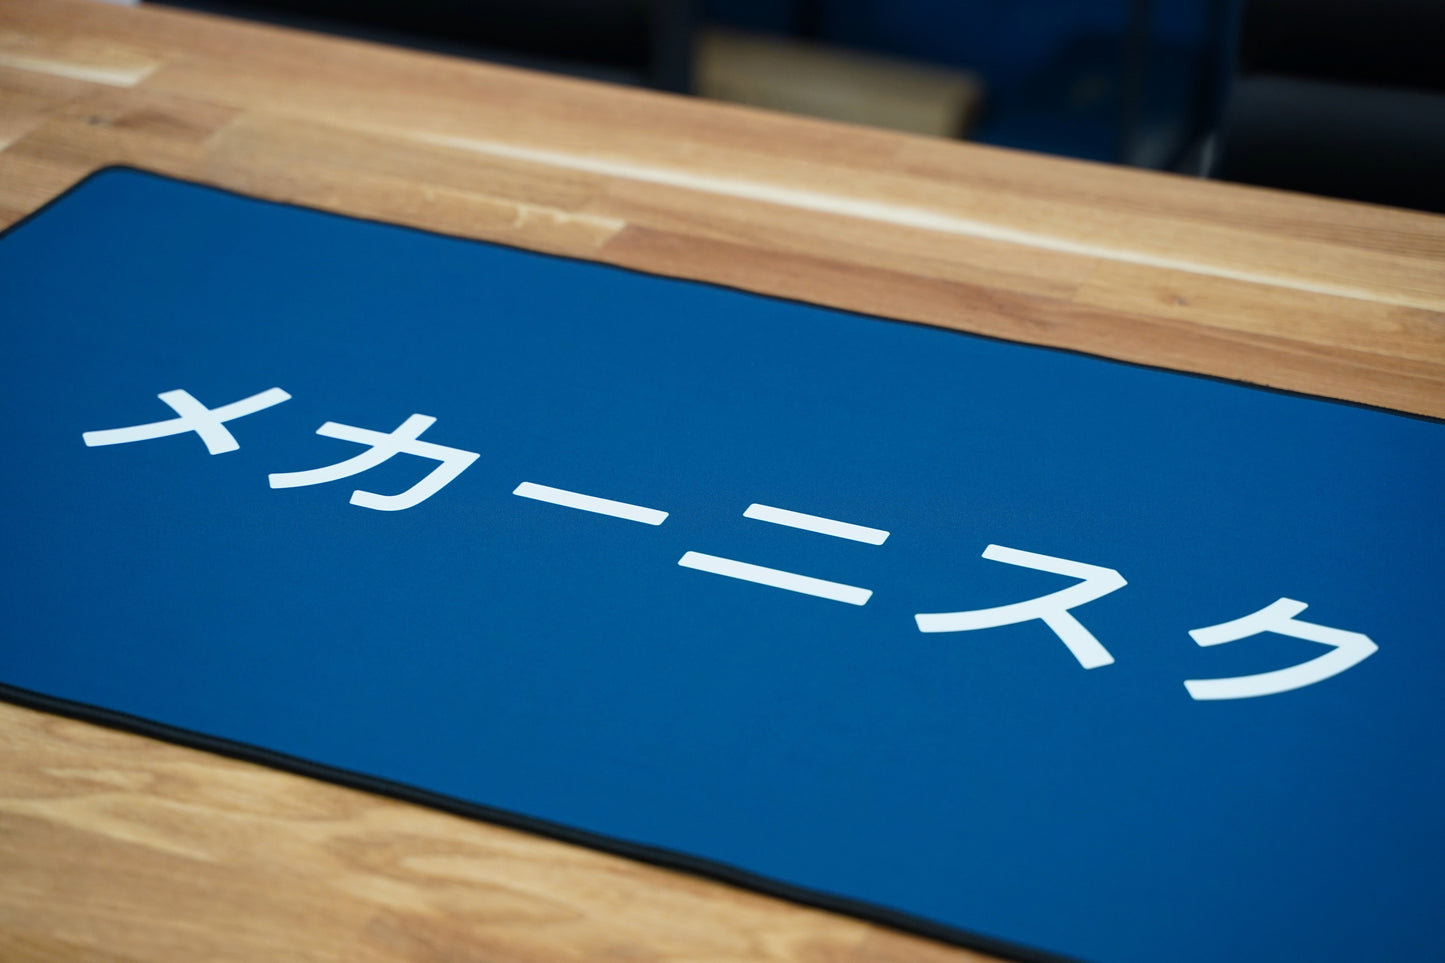 Mekanisk Katakana Deskpad